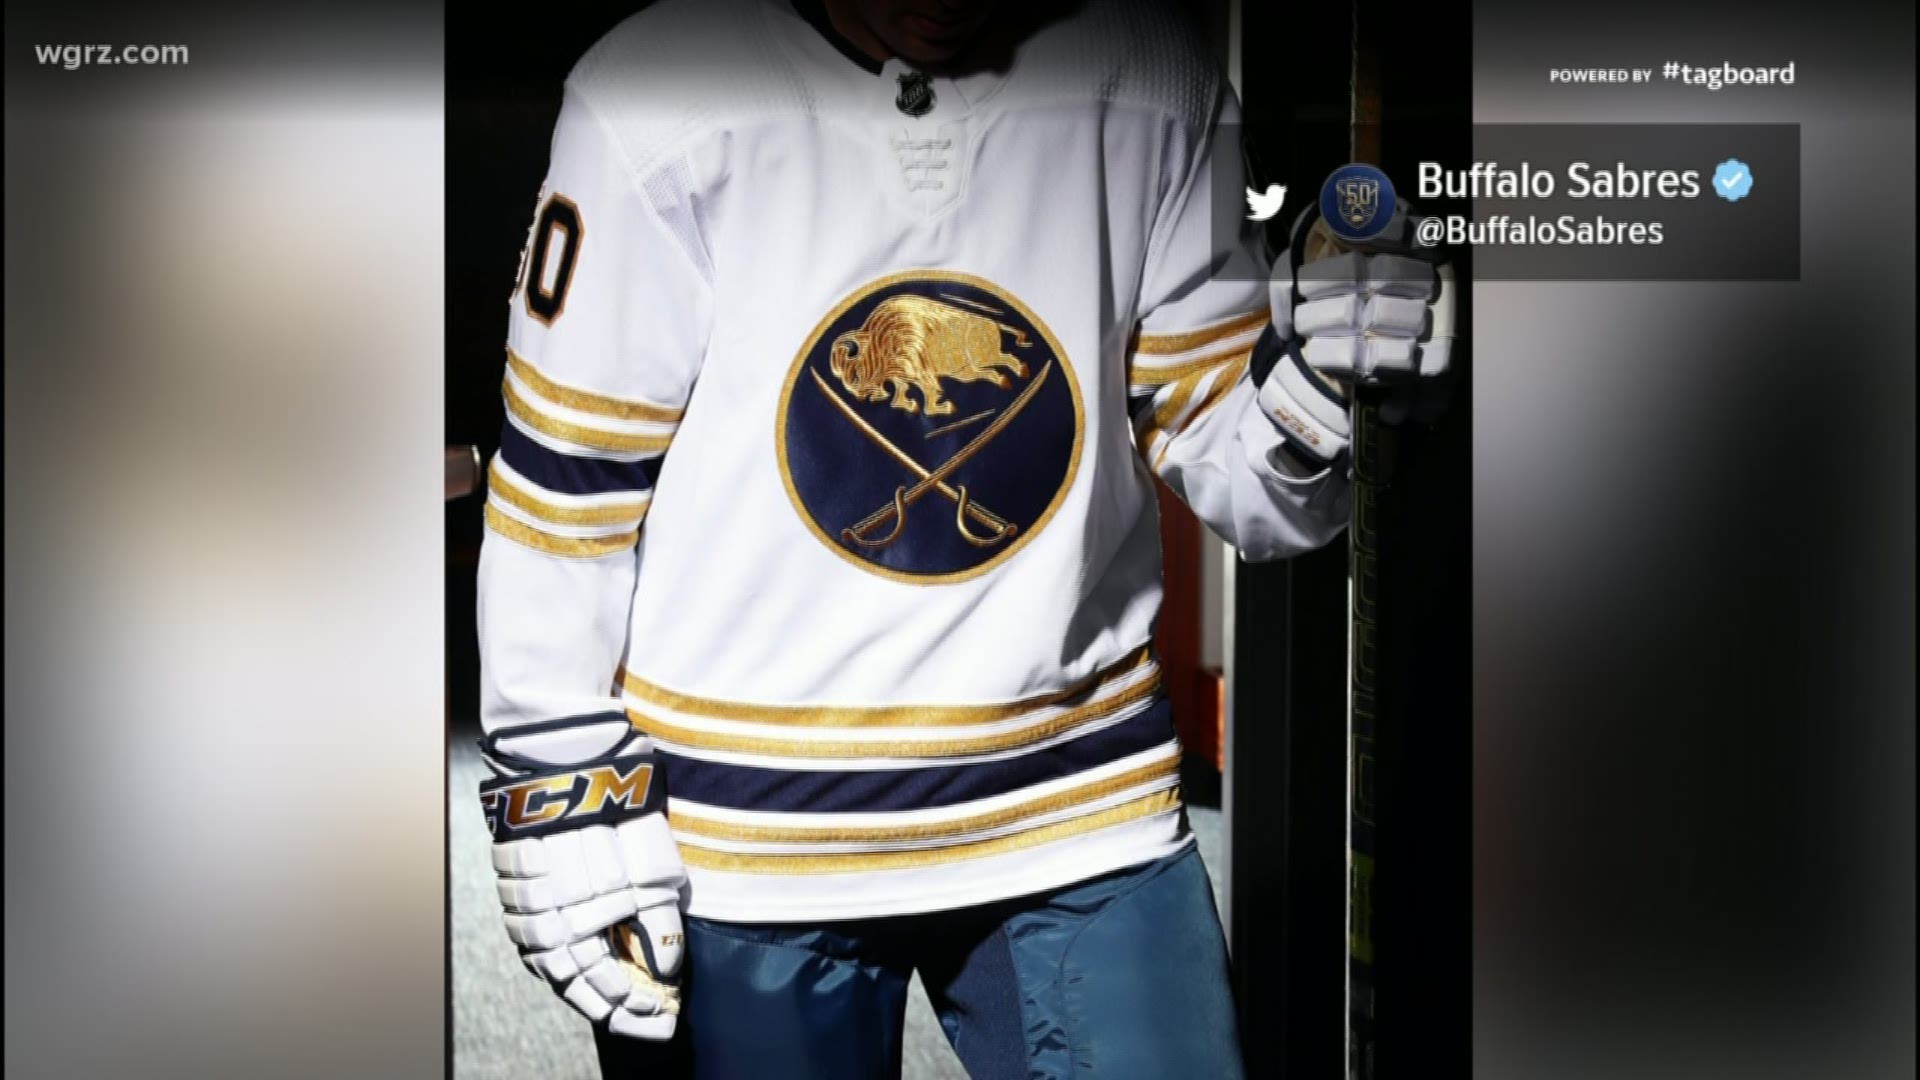 Buffalo Sabres Jersey Stripes Tee Shirt